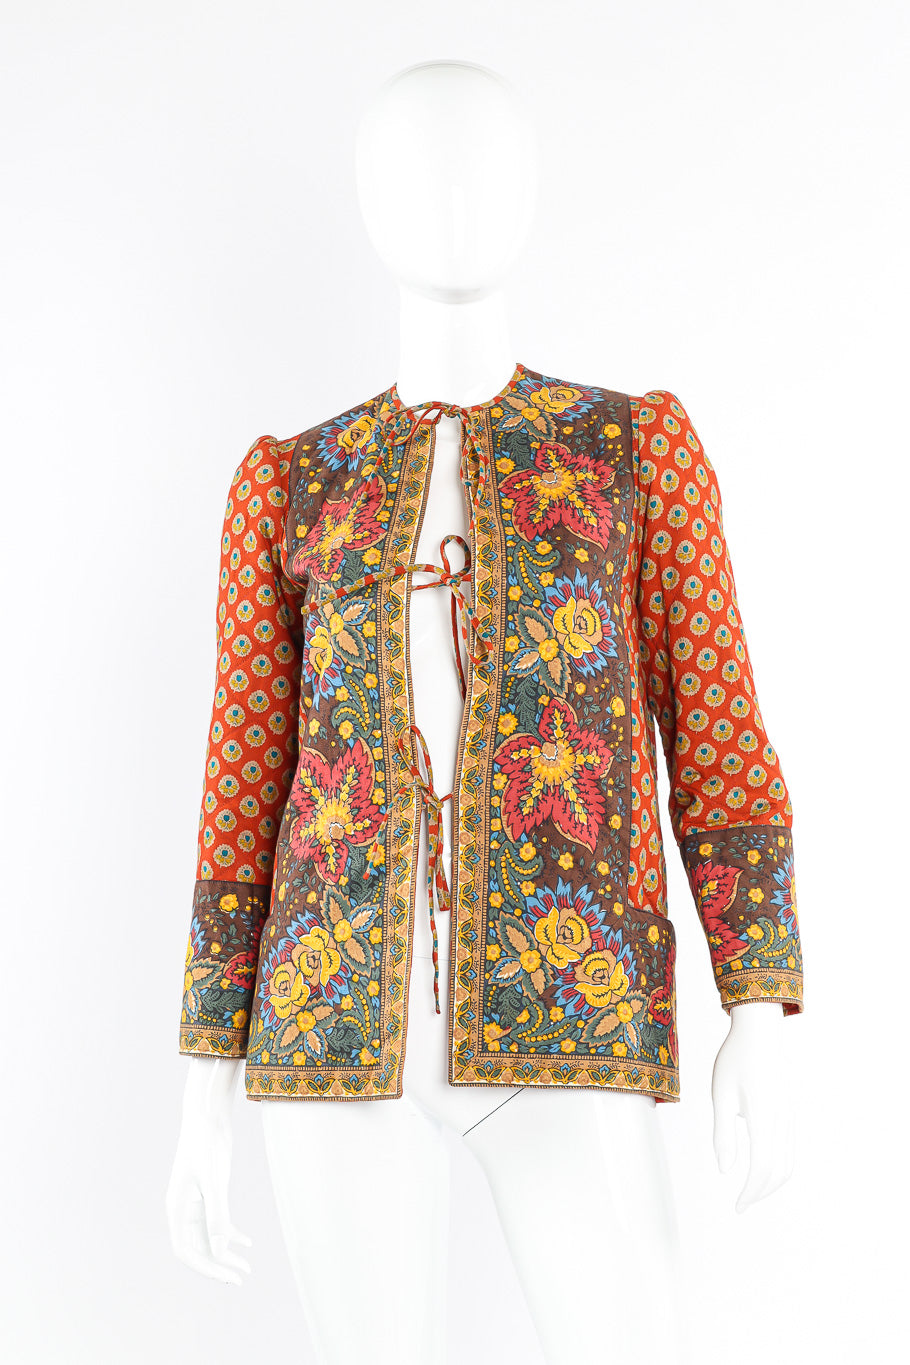 Batik print quilted jacket by La Provence on mannequin front @recessla